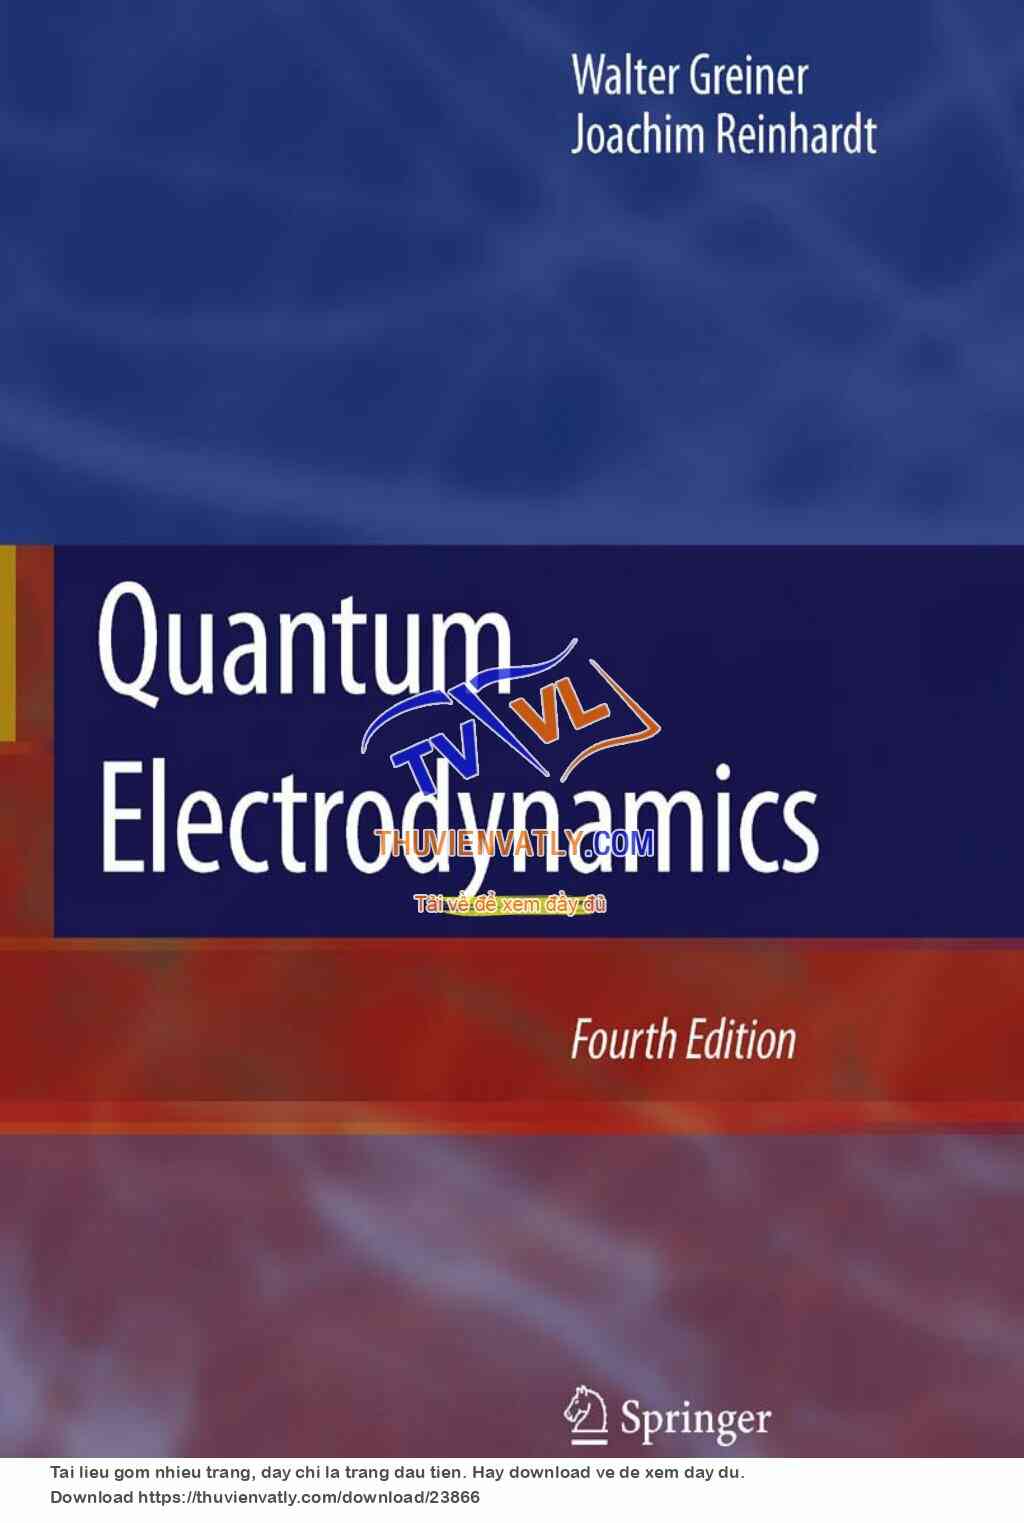 Quantum Electrodynamics, FourthEdition - Walter Greiner & Joachim Reinhardt